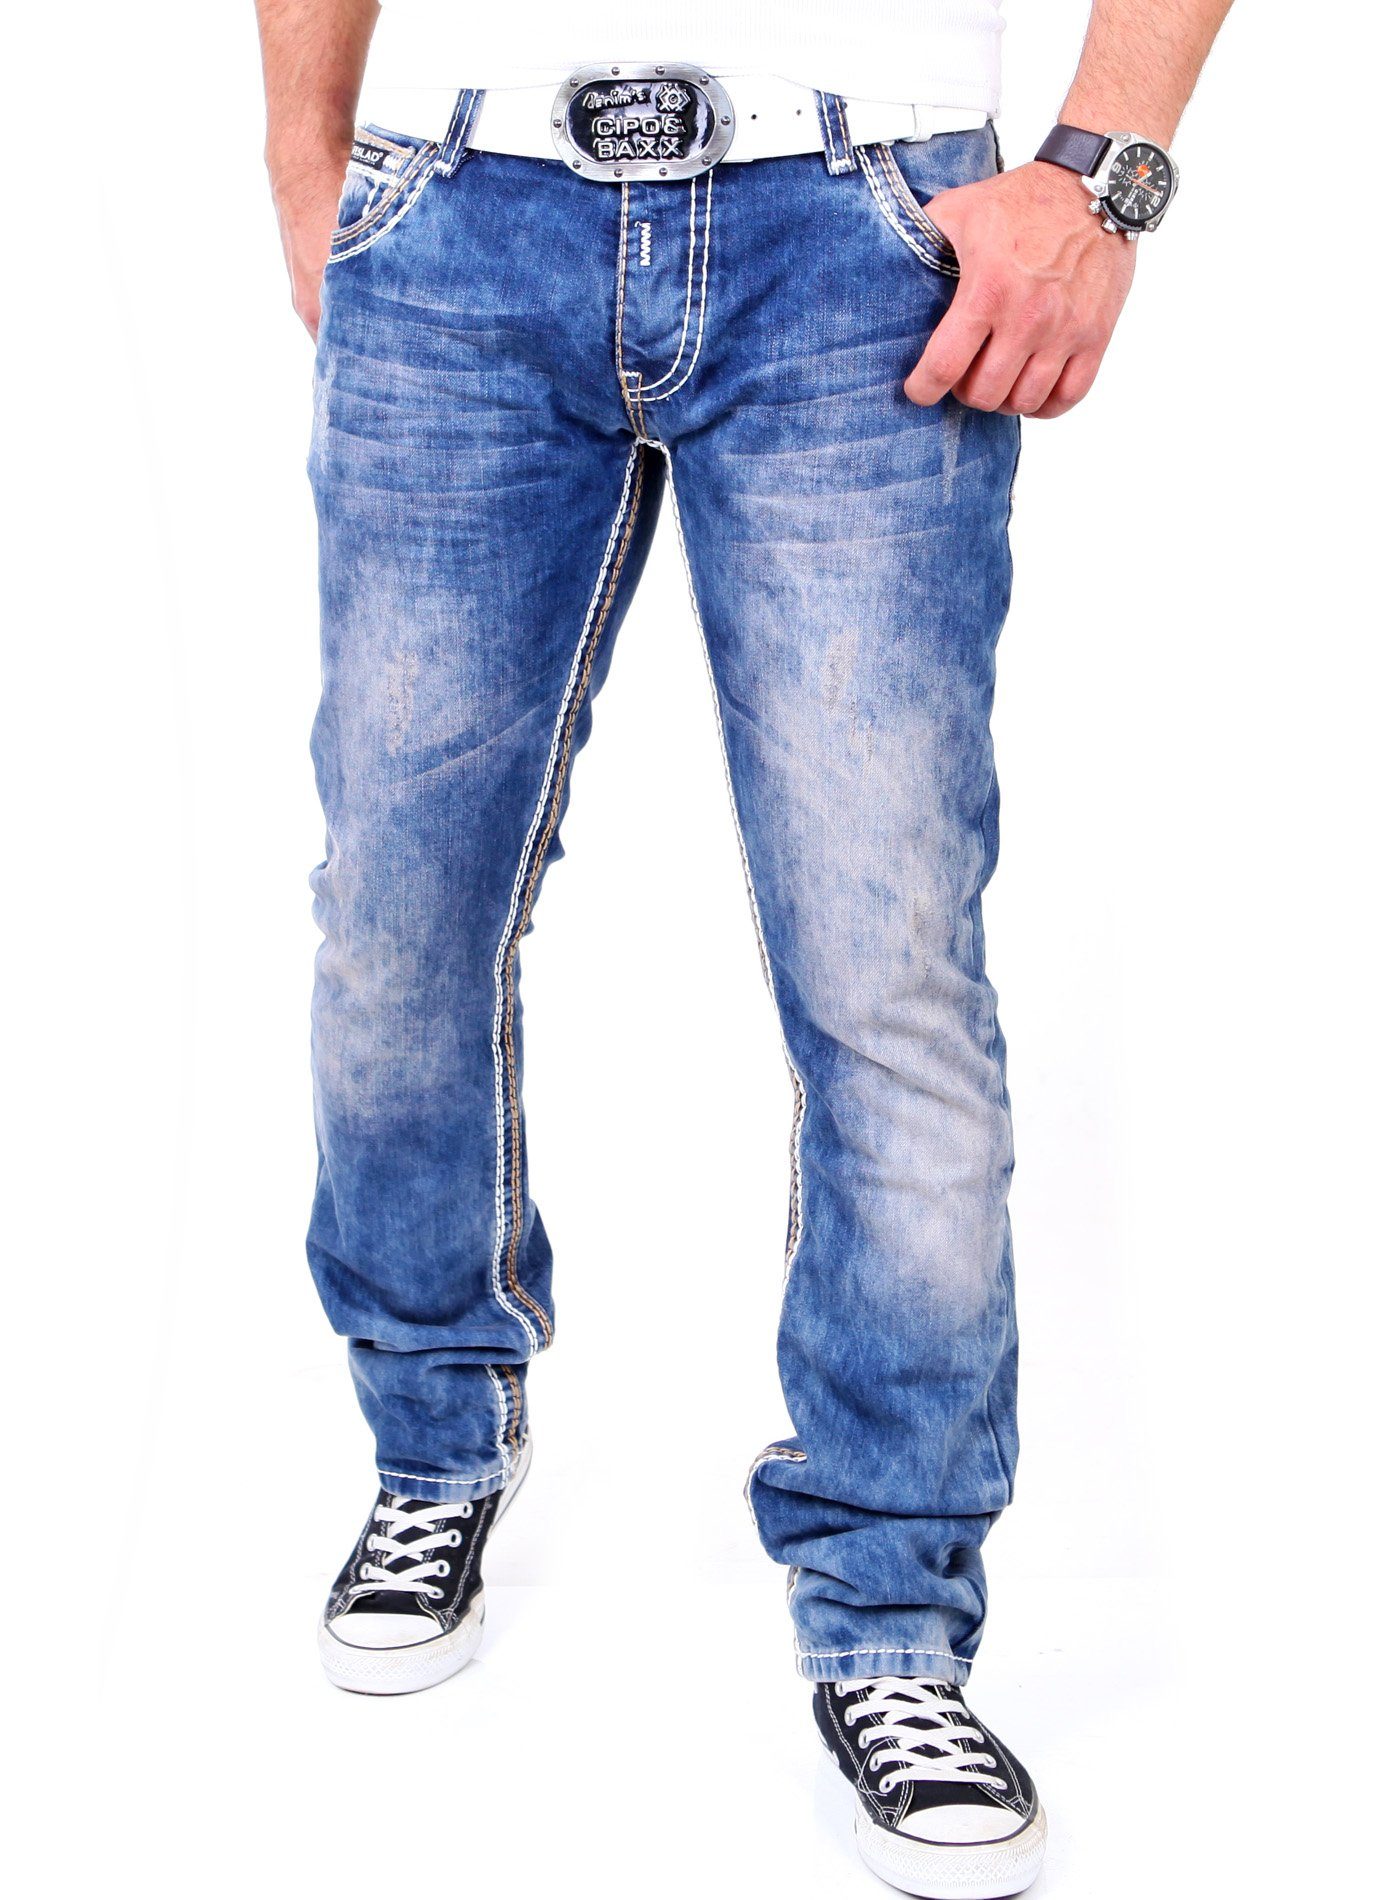 Herren Jeans Chino Hose dicke Nähte Naht Destroyed Clubwear Cargo Style Blau NEU 